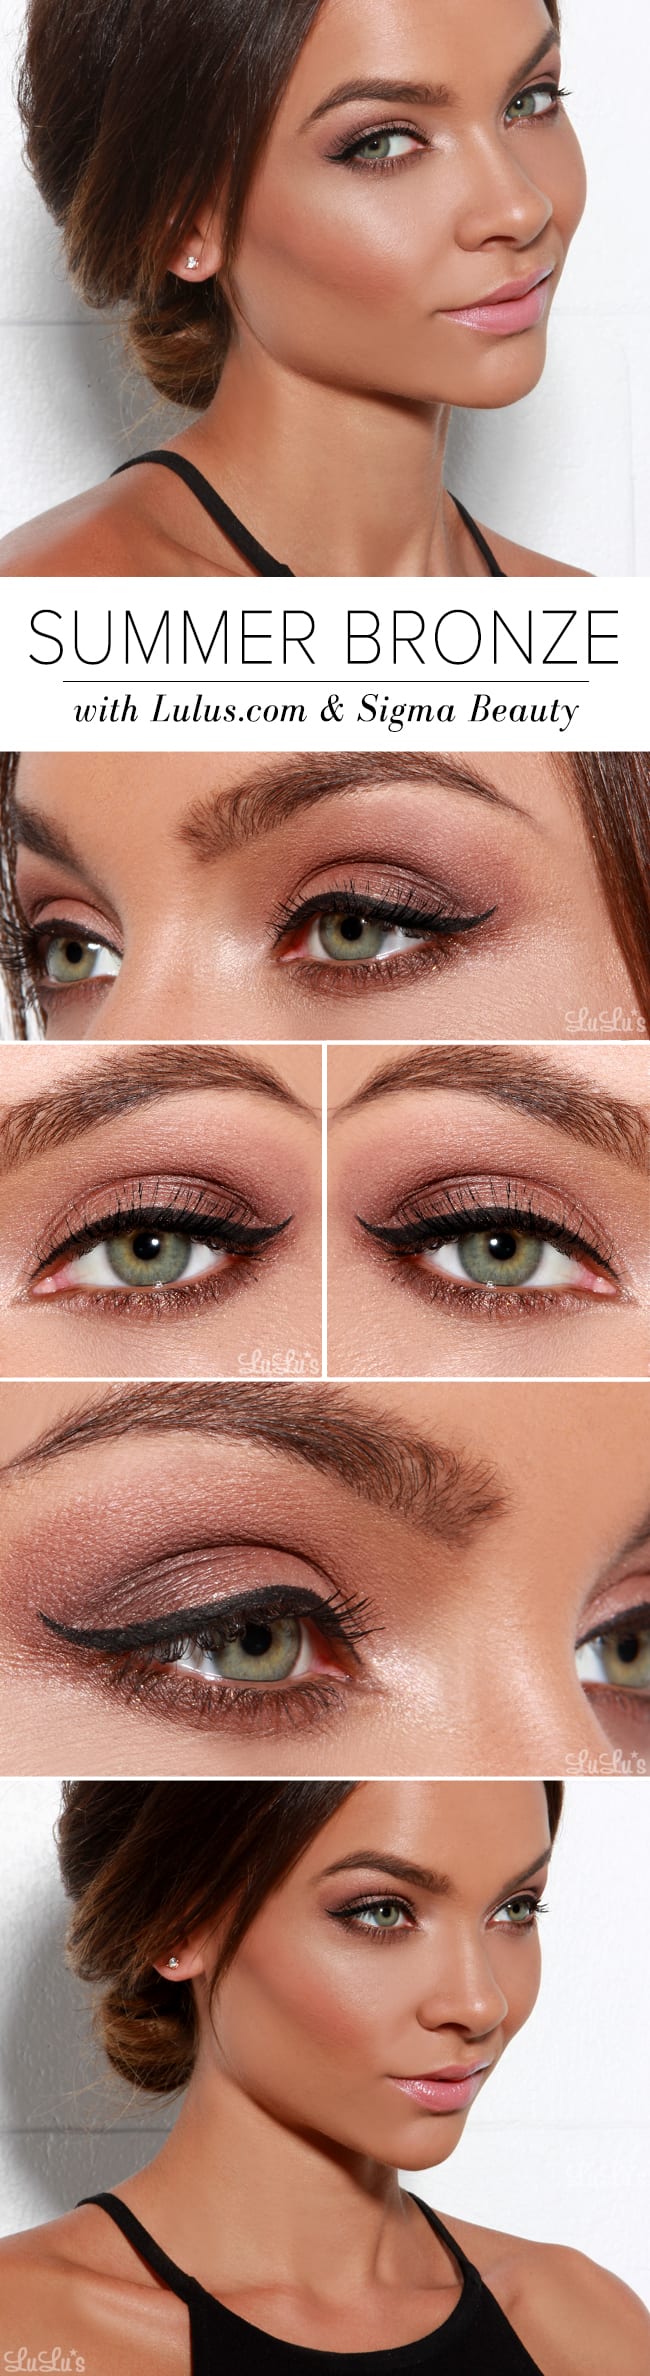 the Look: Bronze Makeup with Sigma Beauty! - Lulus.com Fashion Blog